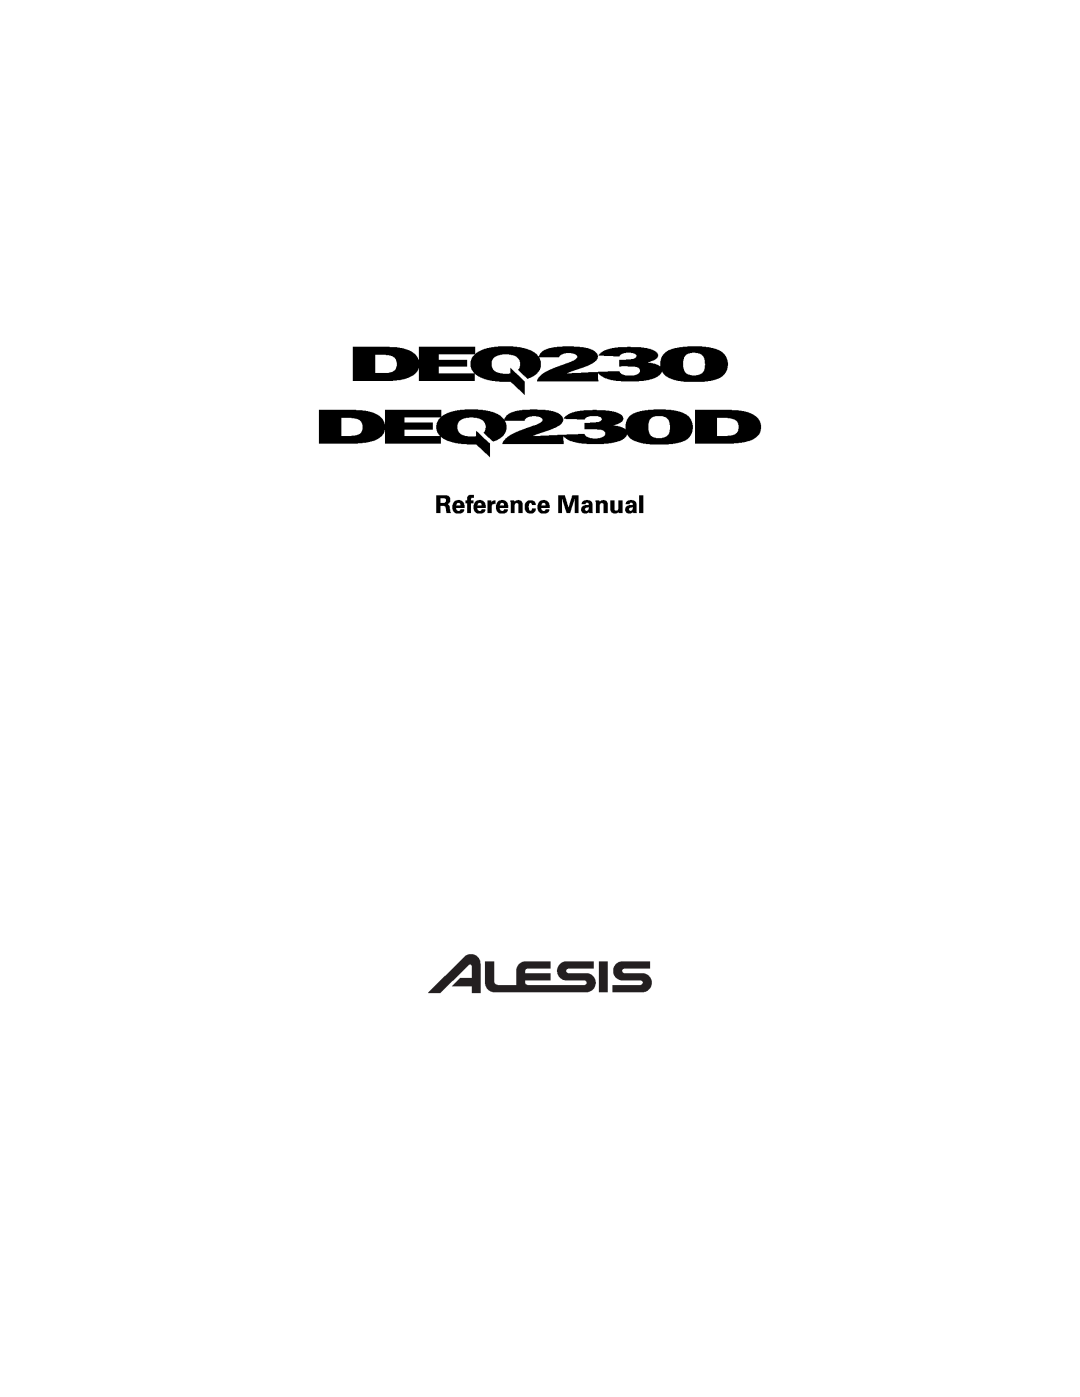 Alesis DEQ230D manual Reference Manual 